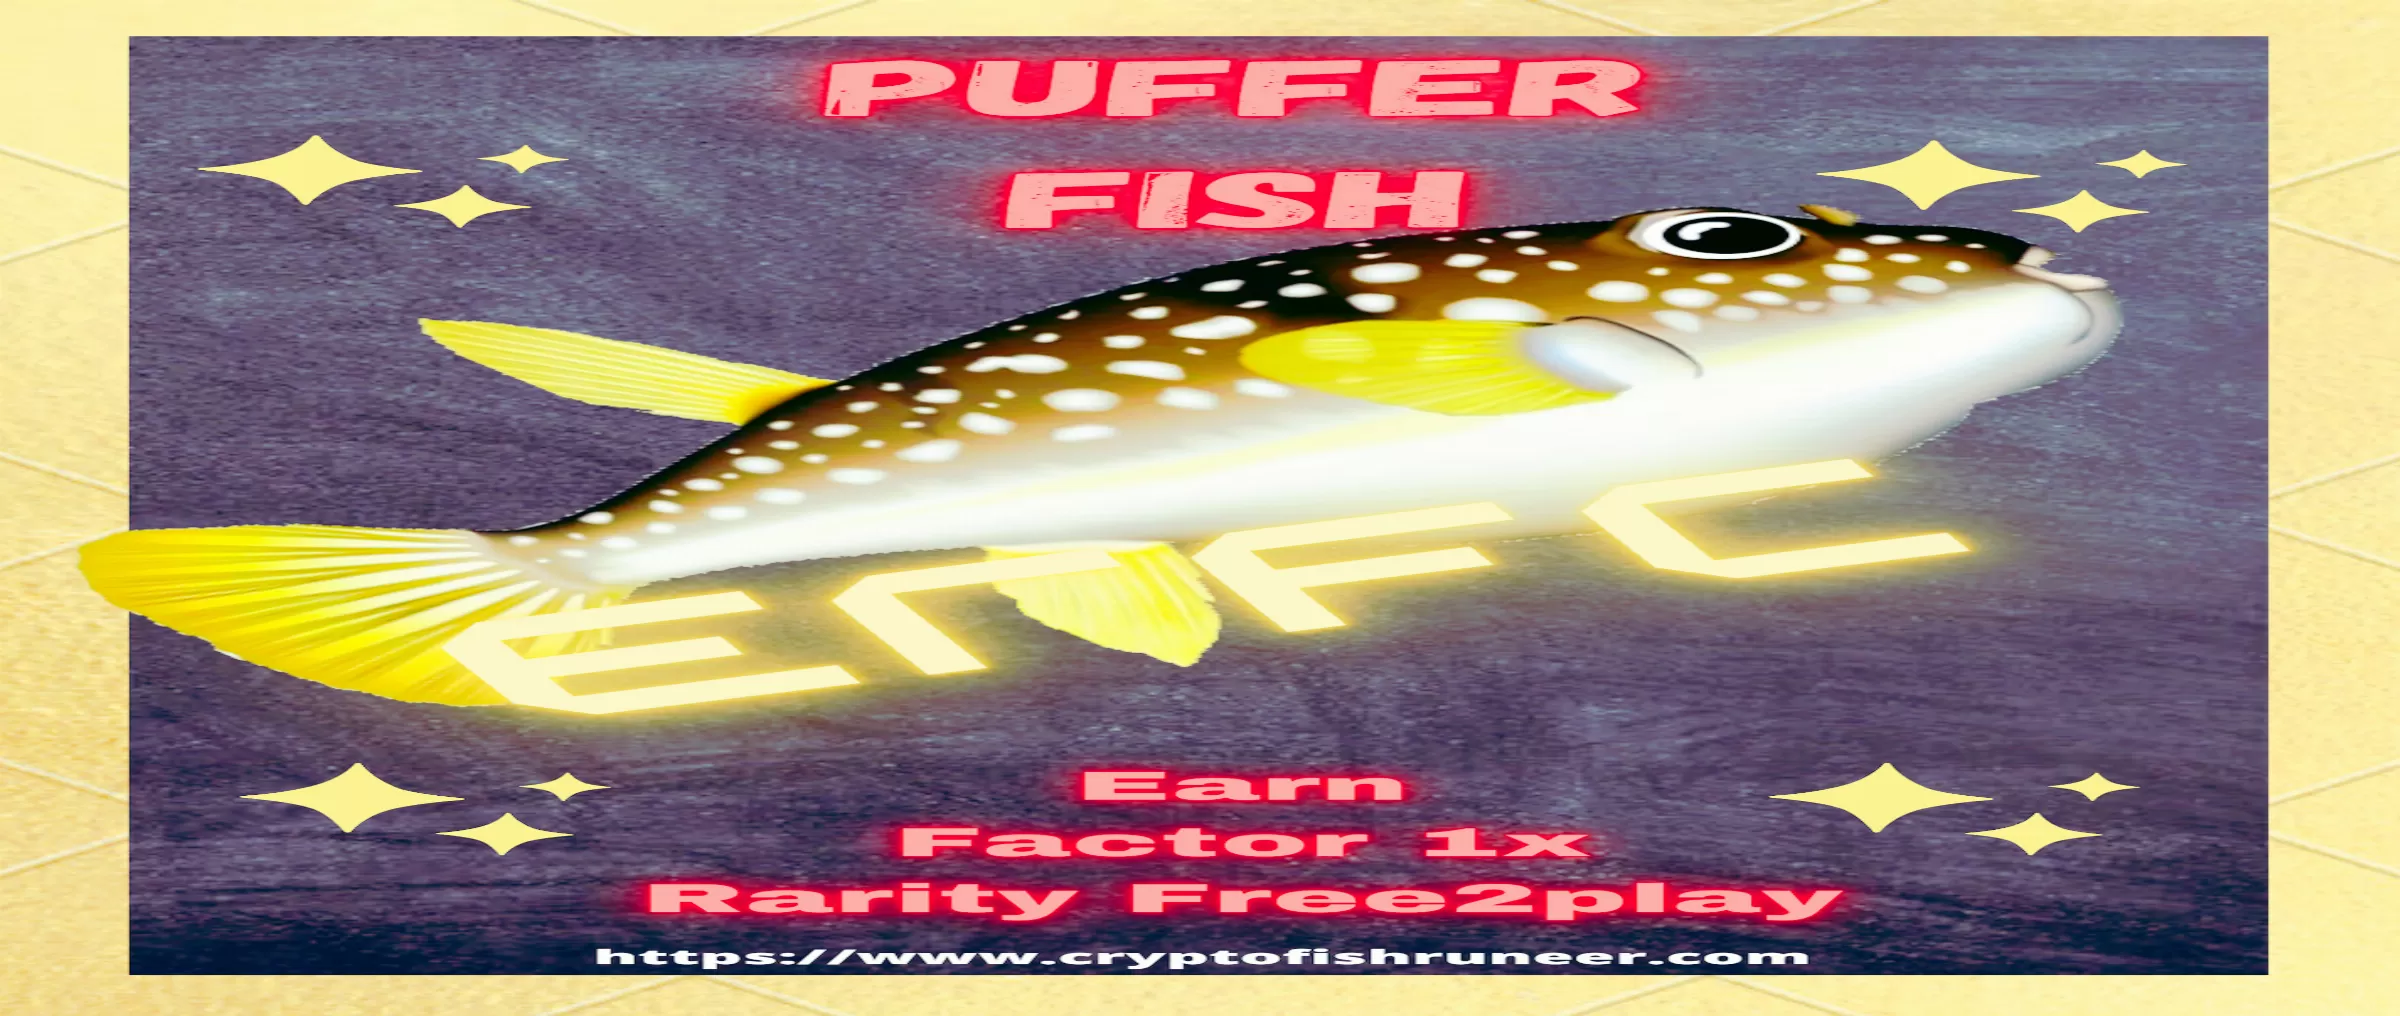 Endless runner fish game - $ERFC dapp bsc